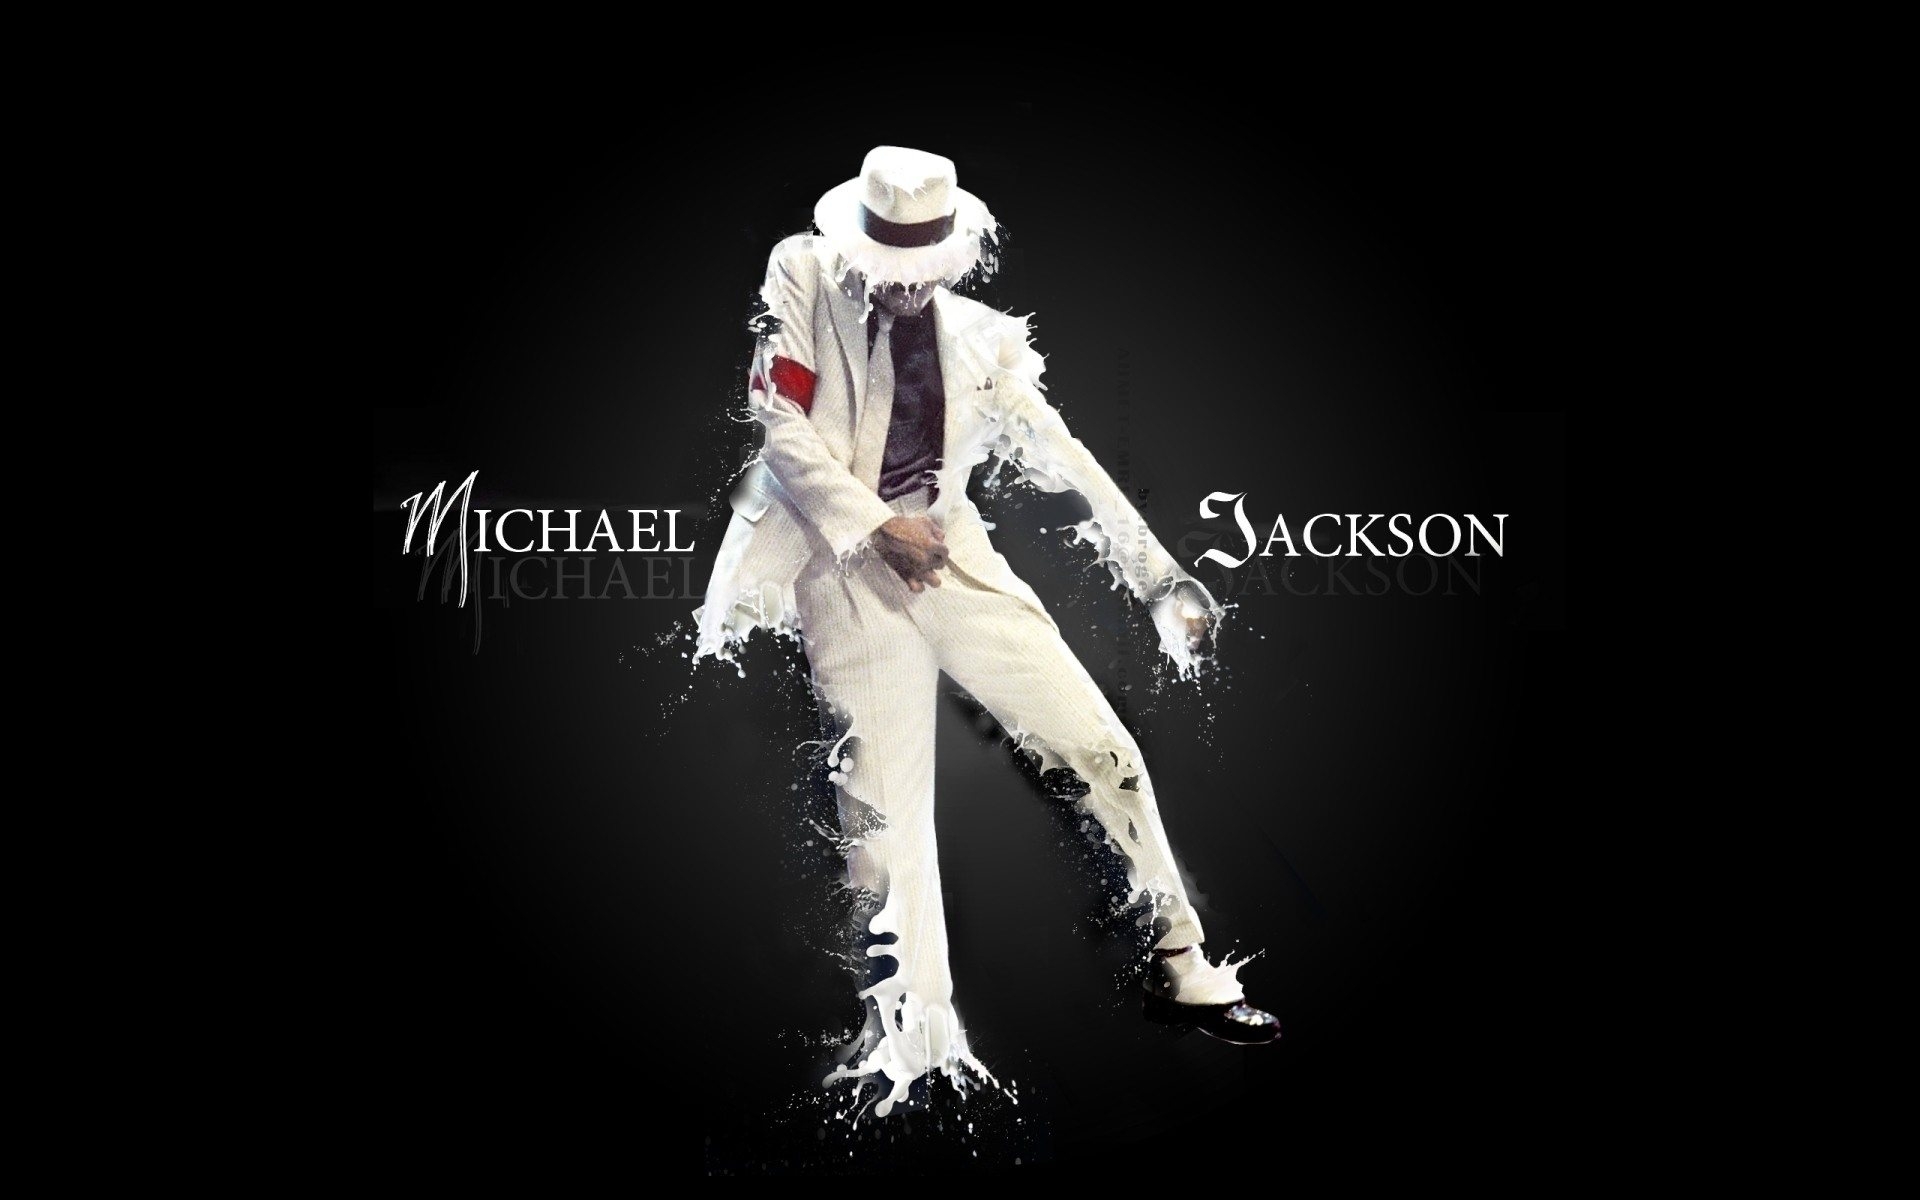 Michael Jackson Wallpaper Pictures Image